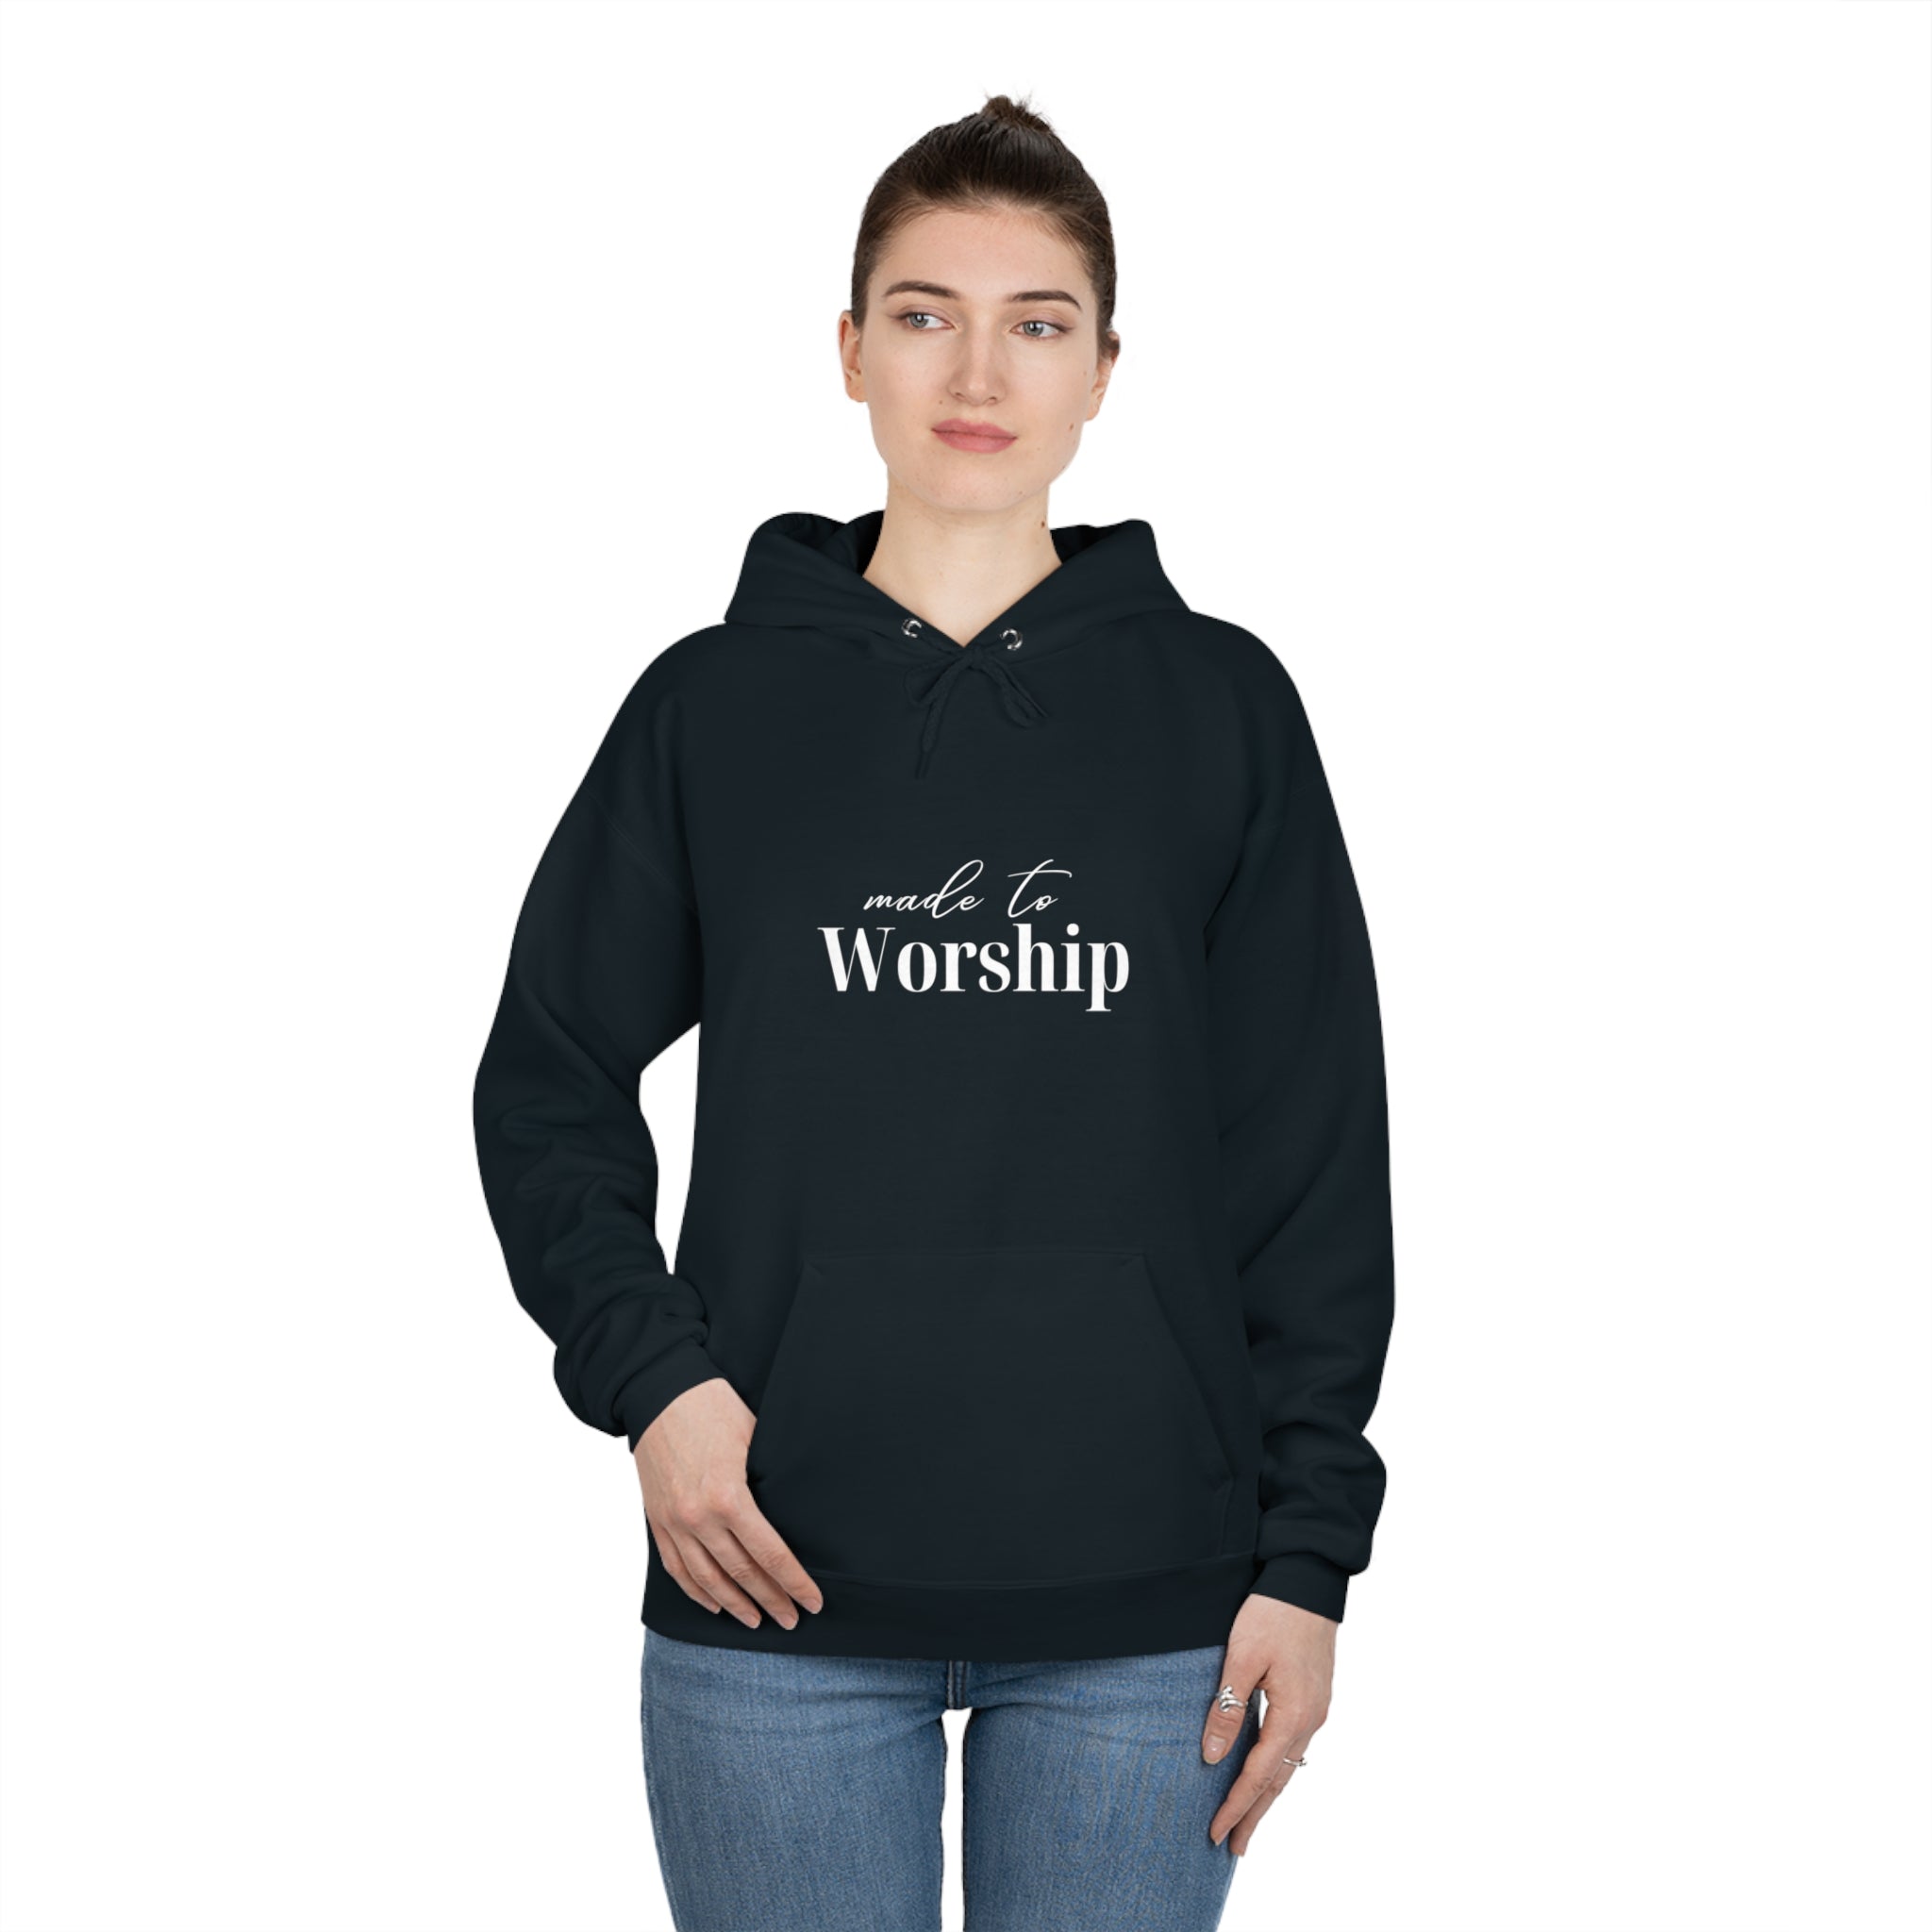 "Made To Worship" Hoodie